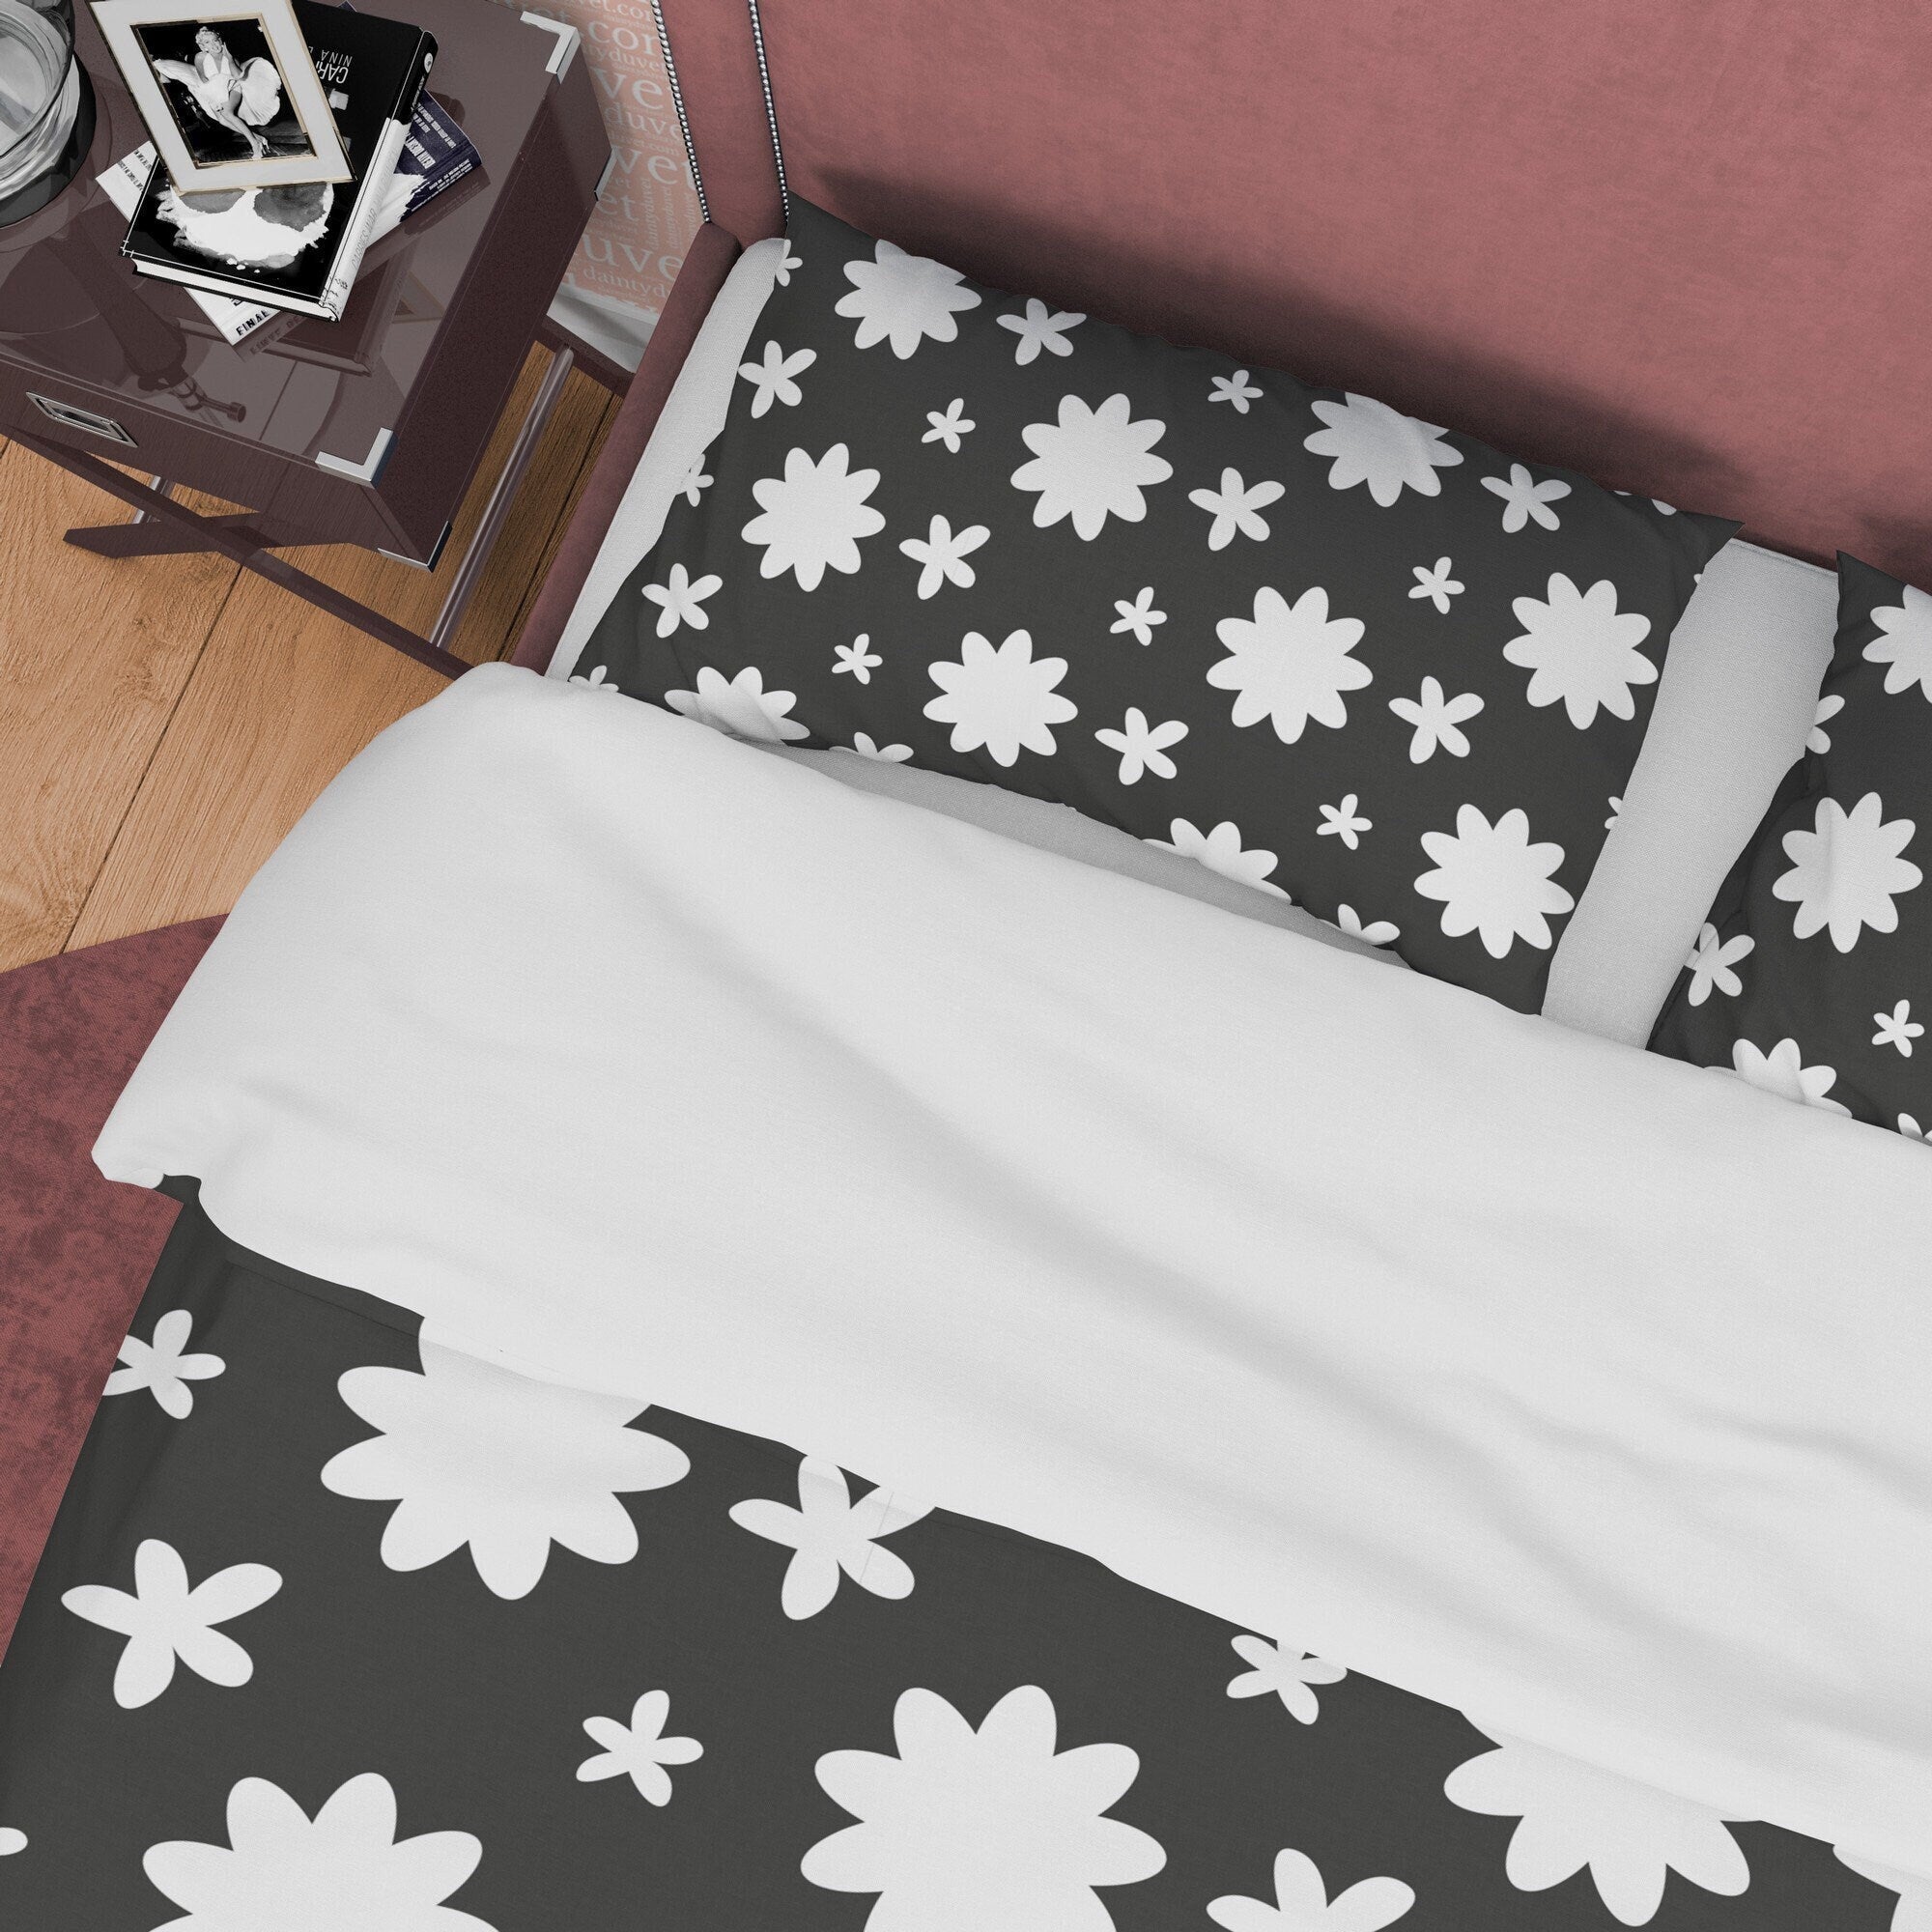 Black and White Duvet Cover Set, Geometric Flower Blanket Cover 90s Nostalgia Quilt Cover, Retro Printed Bedding Set, Groovy Bedspread